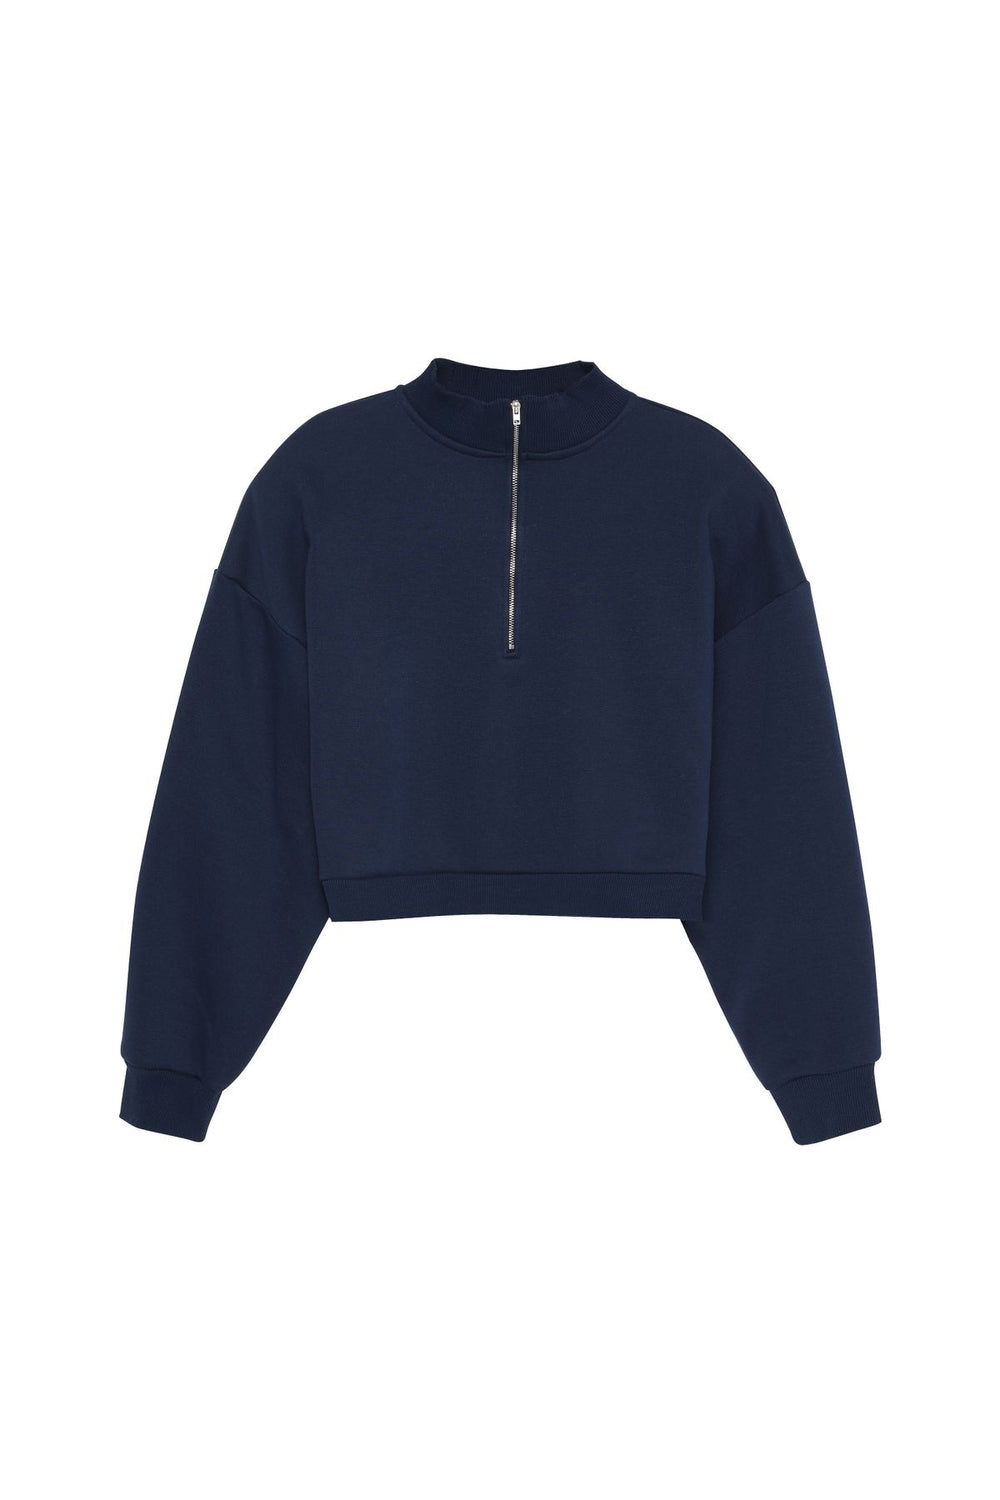 Fermuar Detaylı Crop Sweatshirt Lacivert